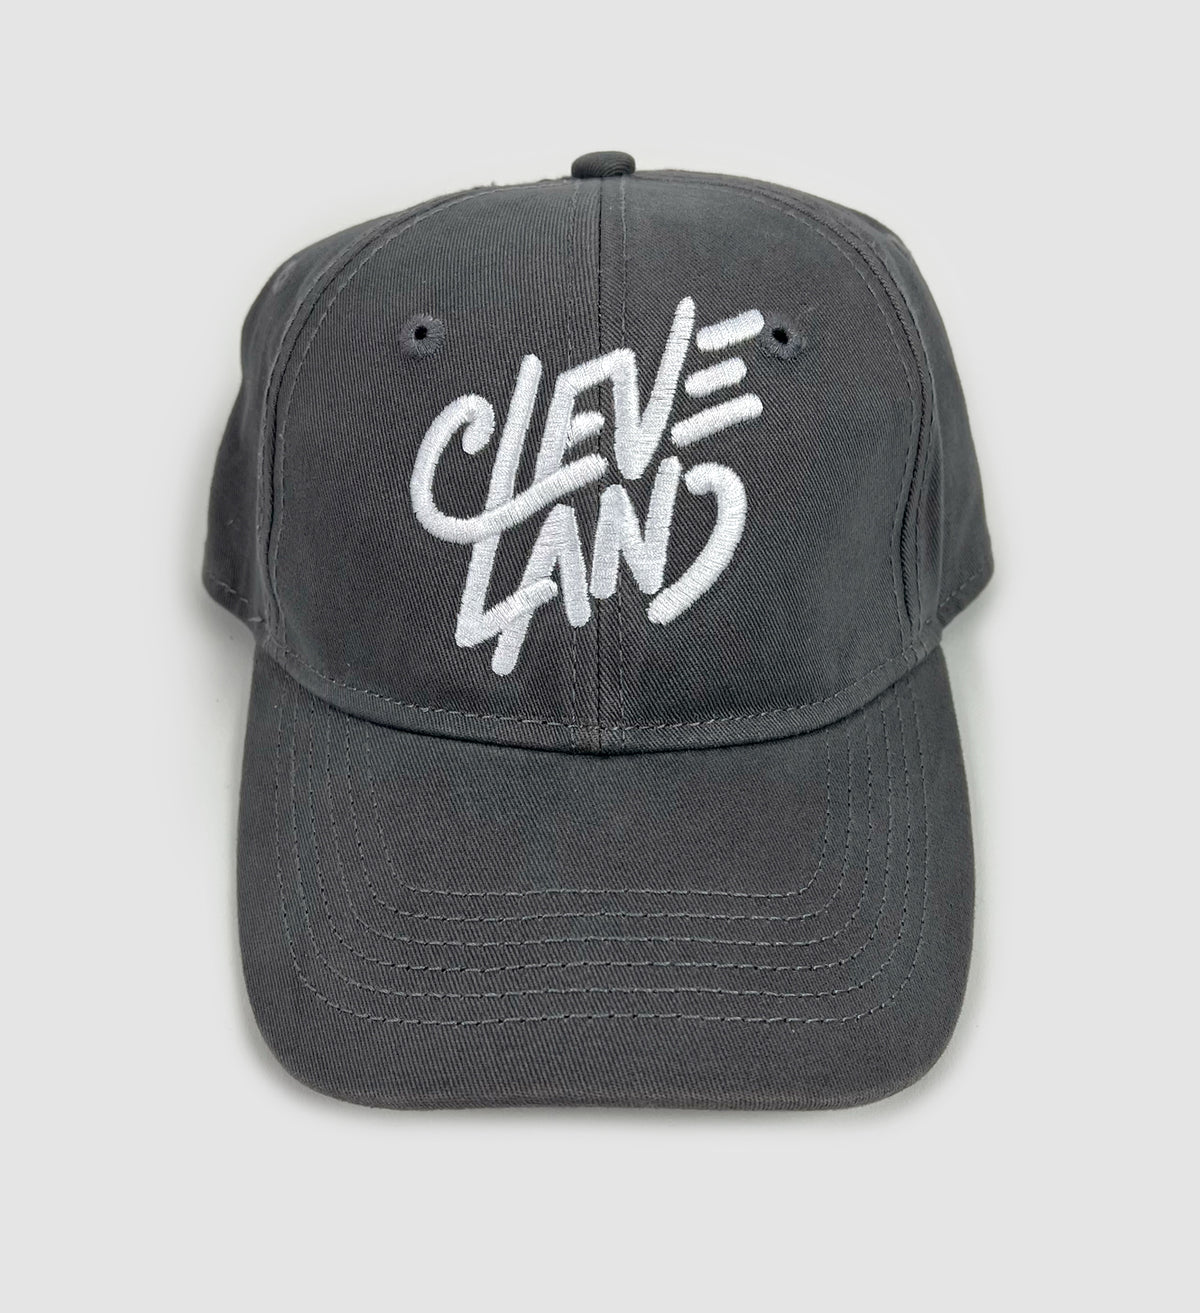 Grey Cleveland Sketch Dad Hat